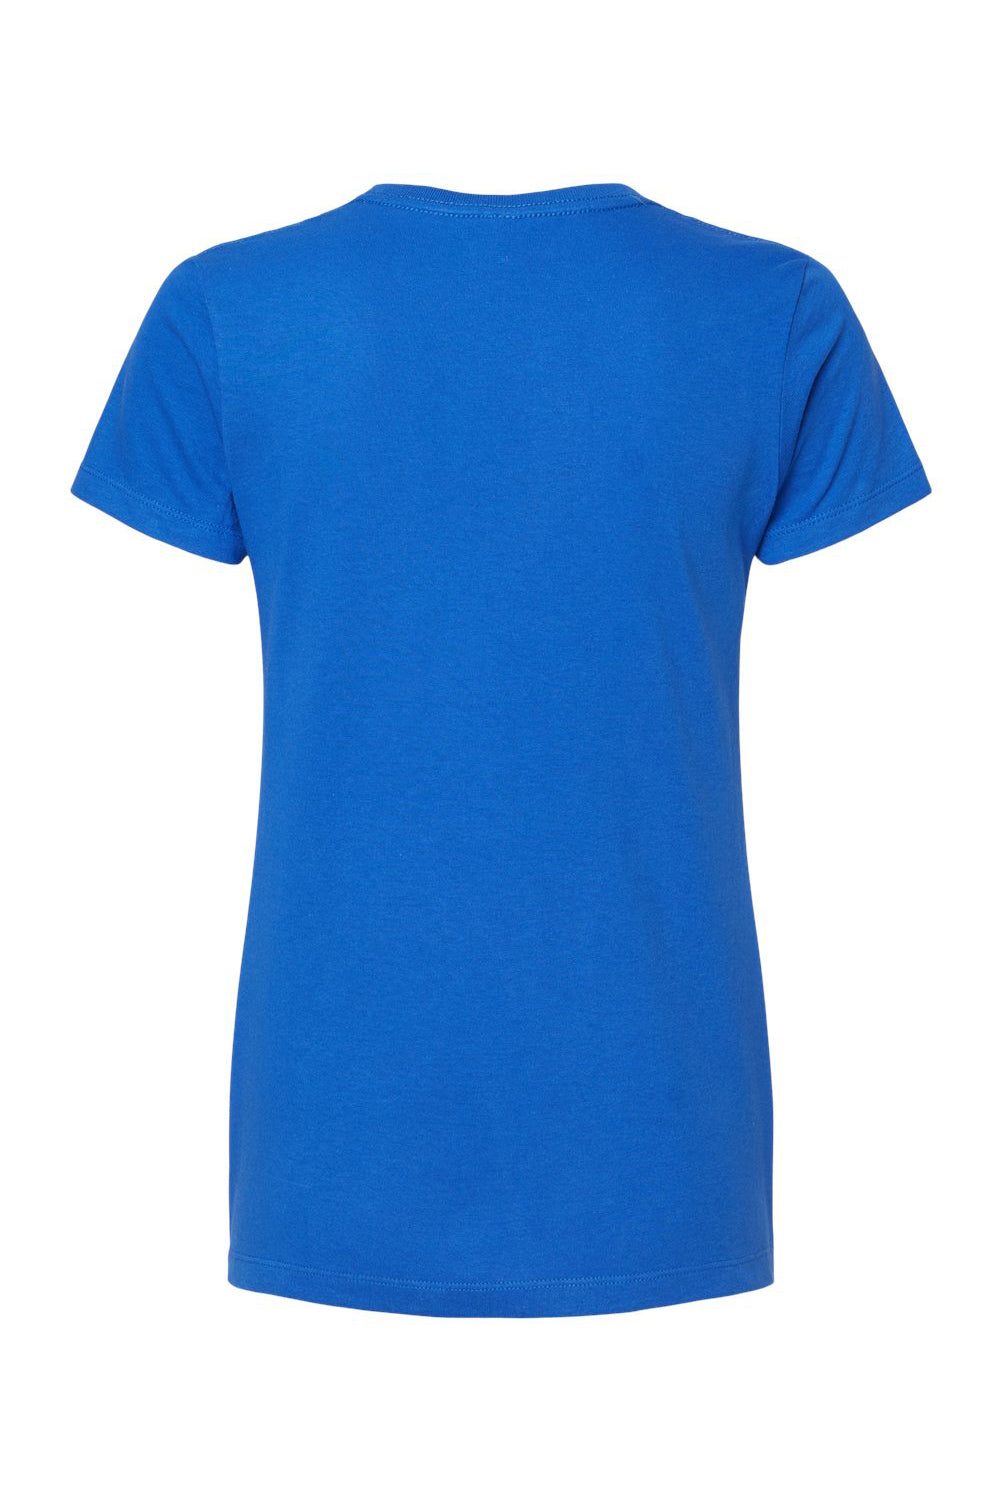 M&O 4810 Womens Gold Soft Touch Short Sleeve Crewneck T-Shirt Royal Blue Flat Back